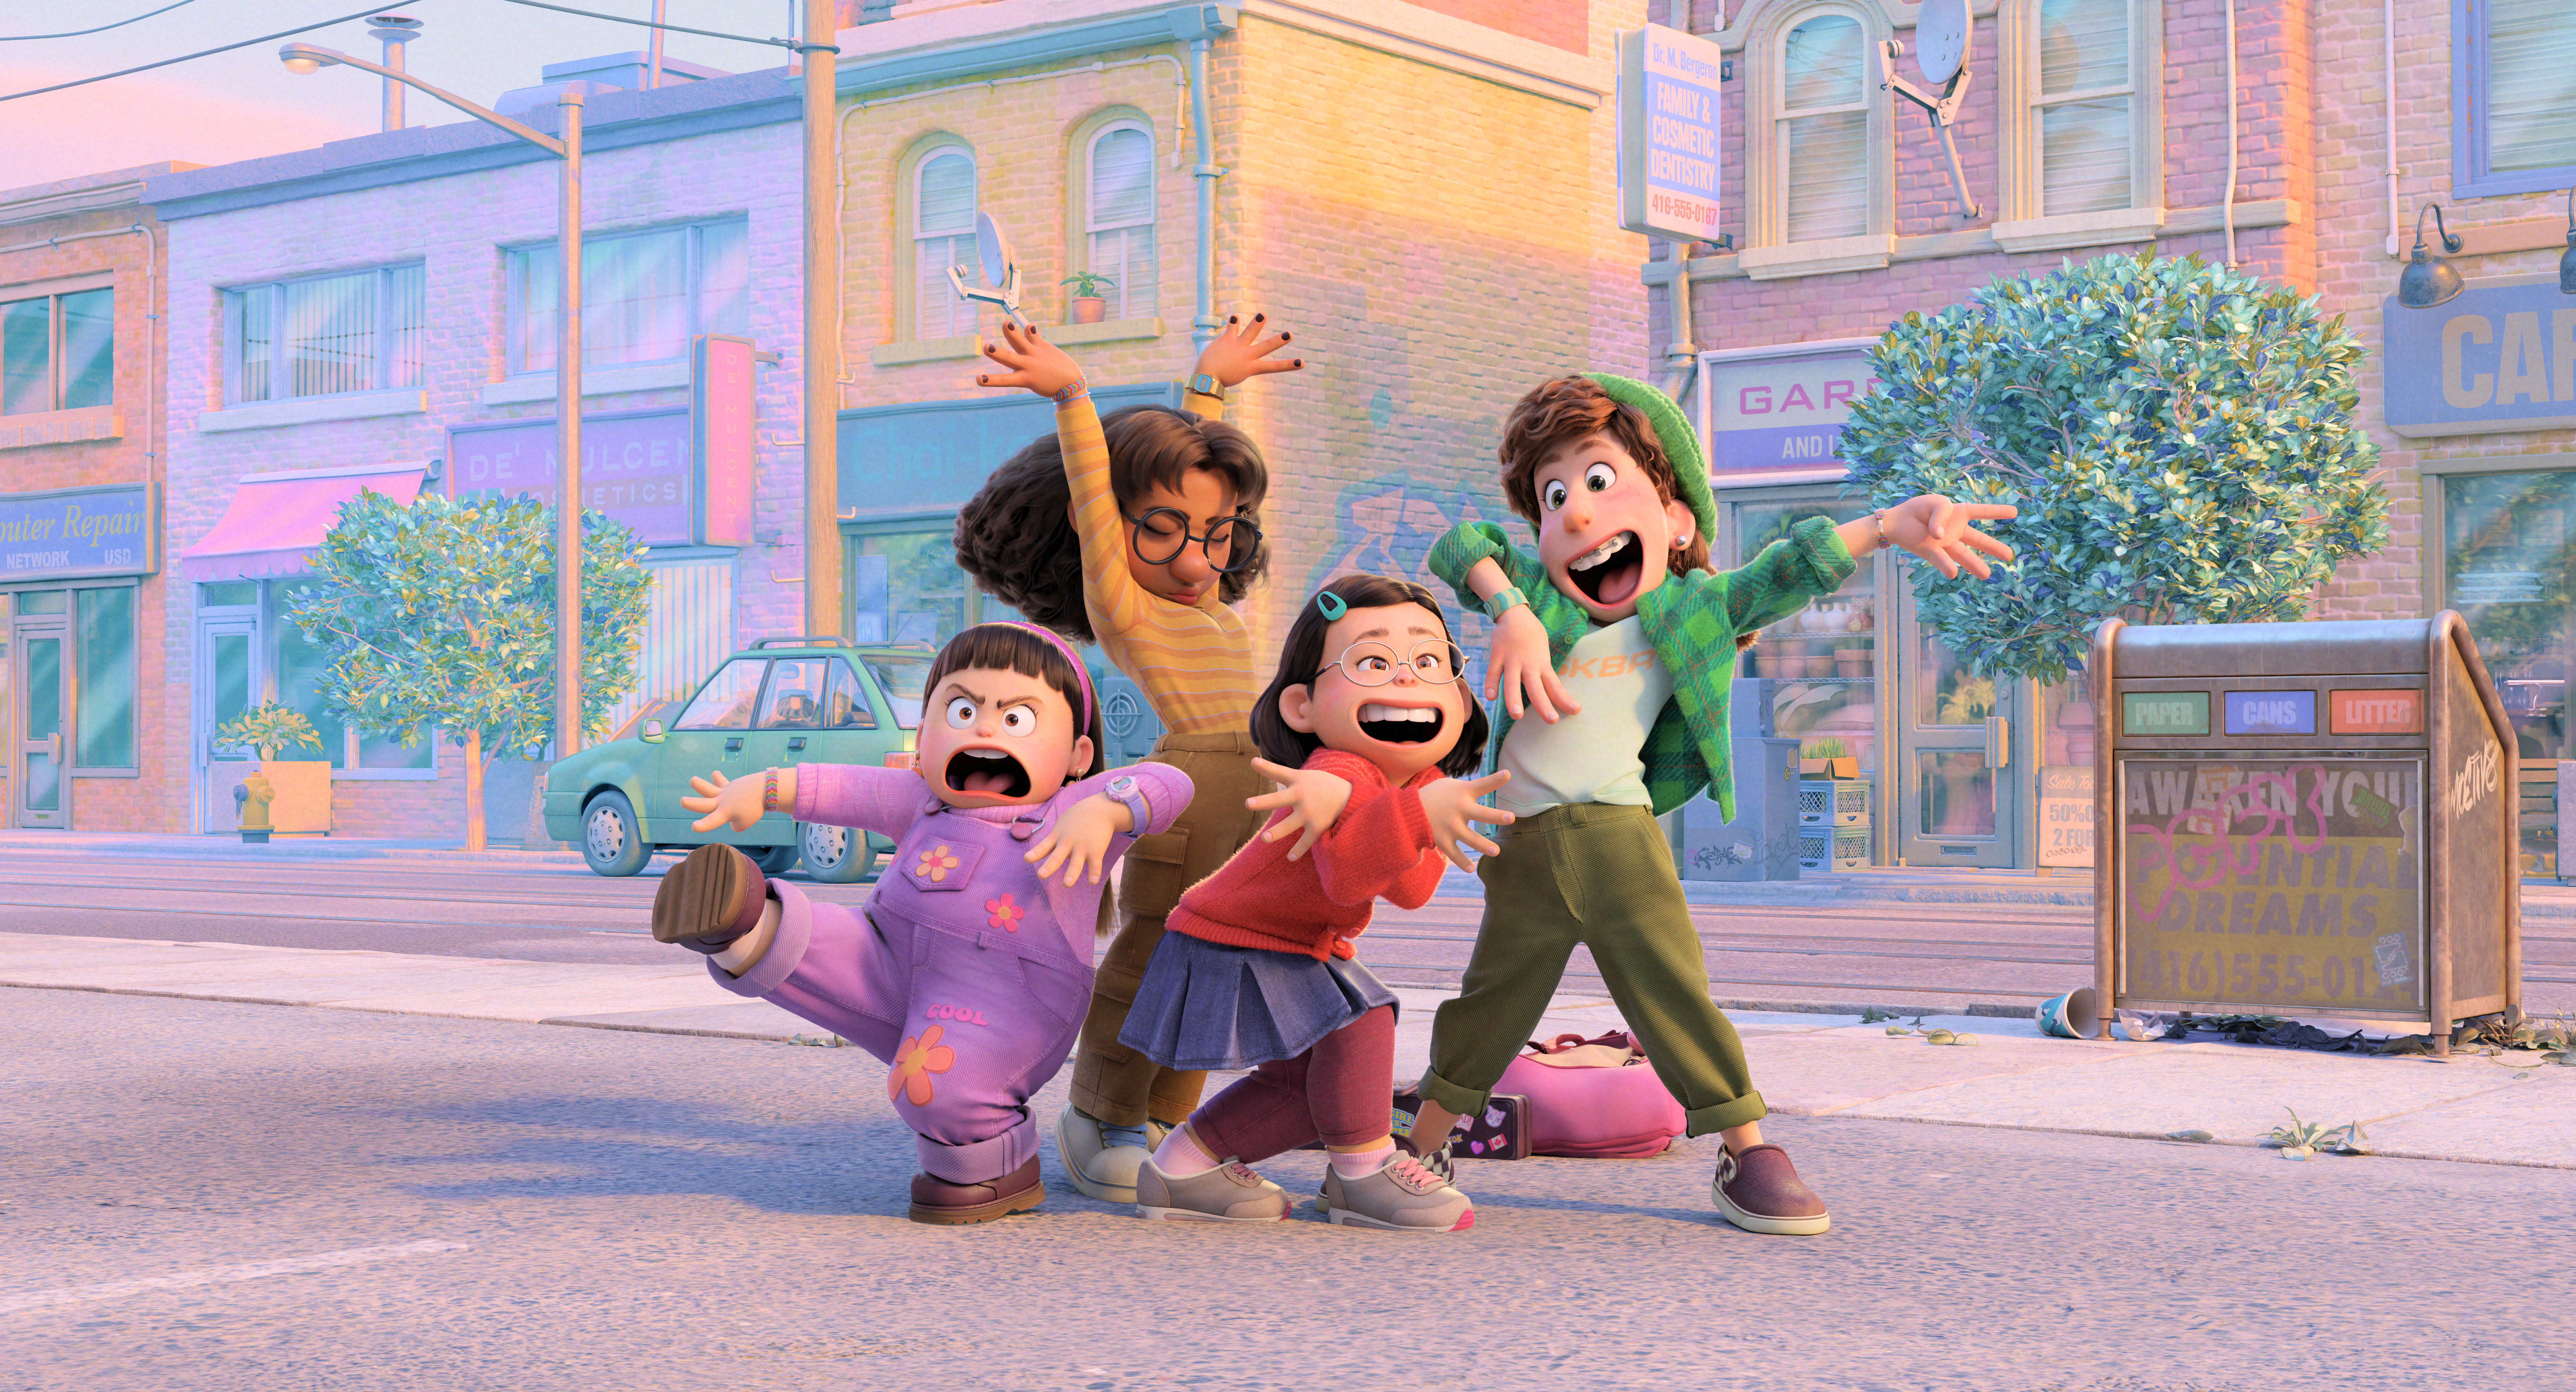 Cuplikan film Turning Red. (Sumber gambar: Disney/Pixar)